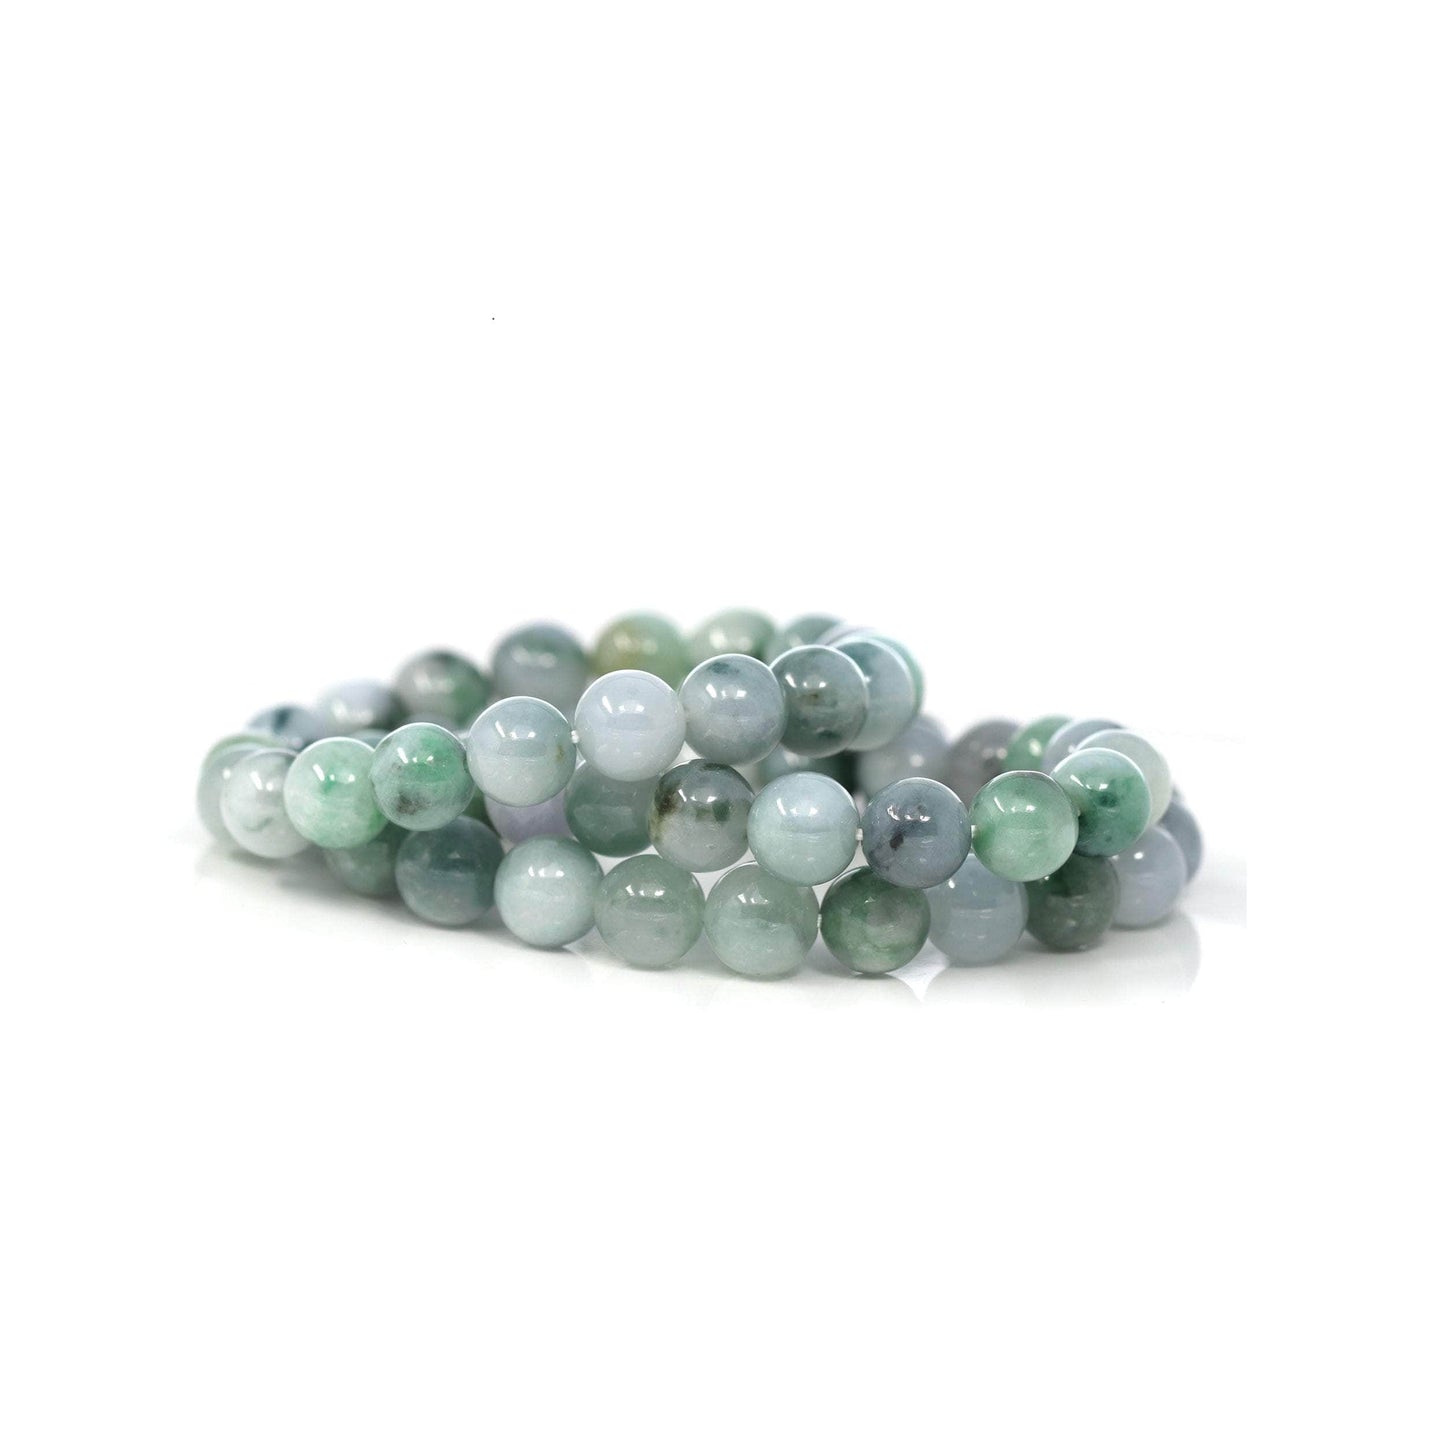 Genuine Jadeite Jade 10mm Round Blue Green Multiple Color Beads Bracelet (10mm)